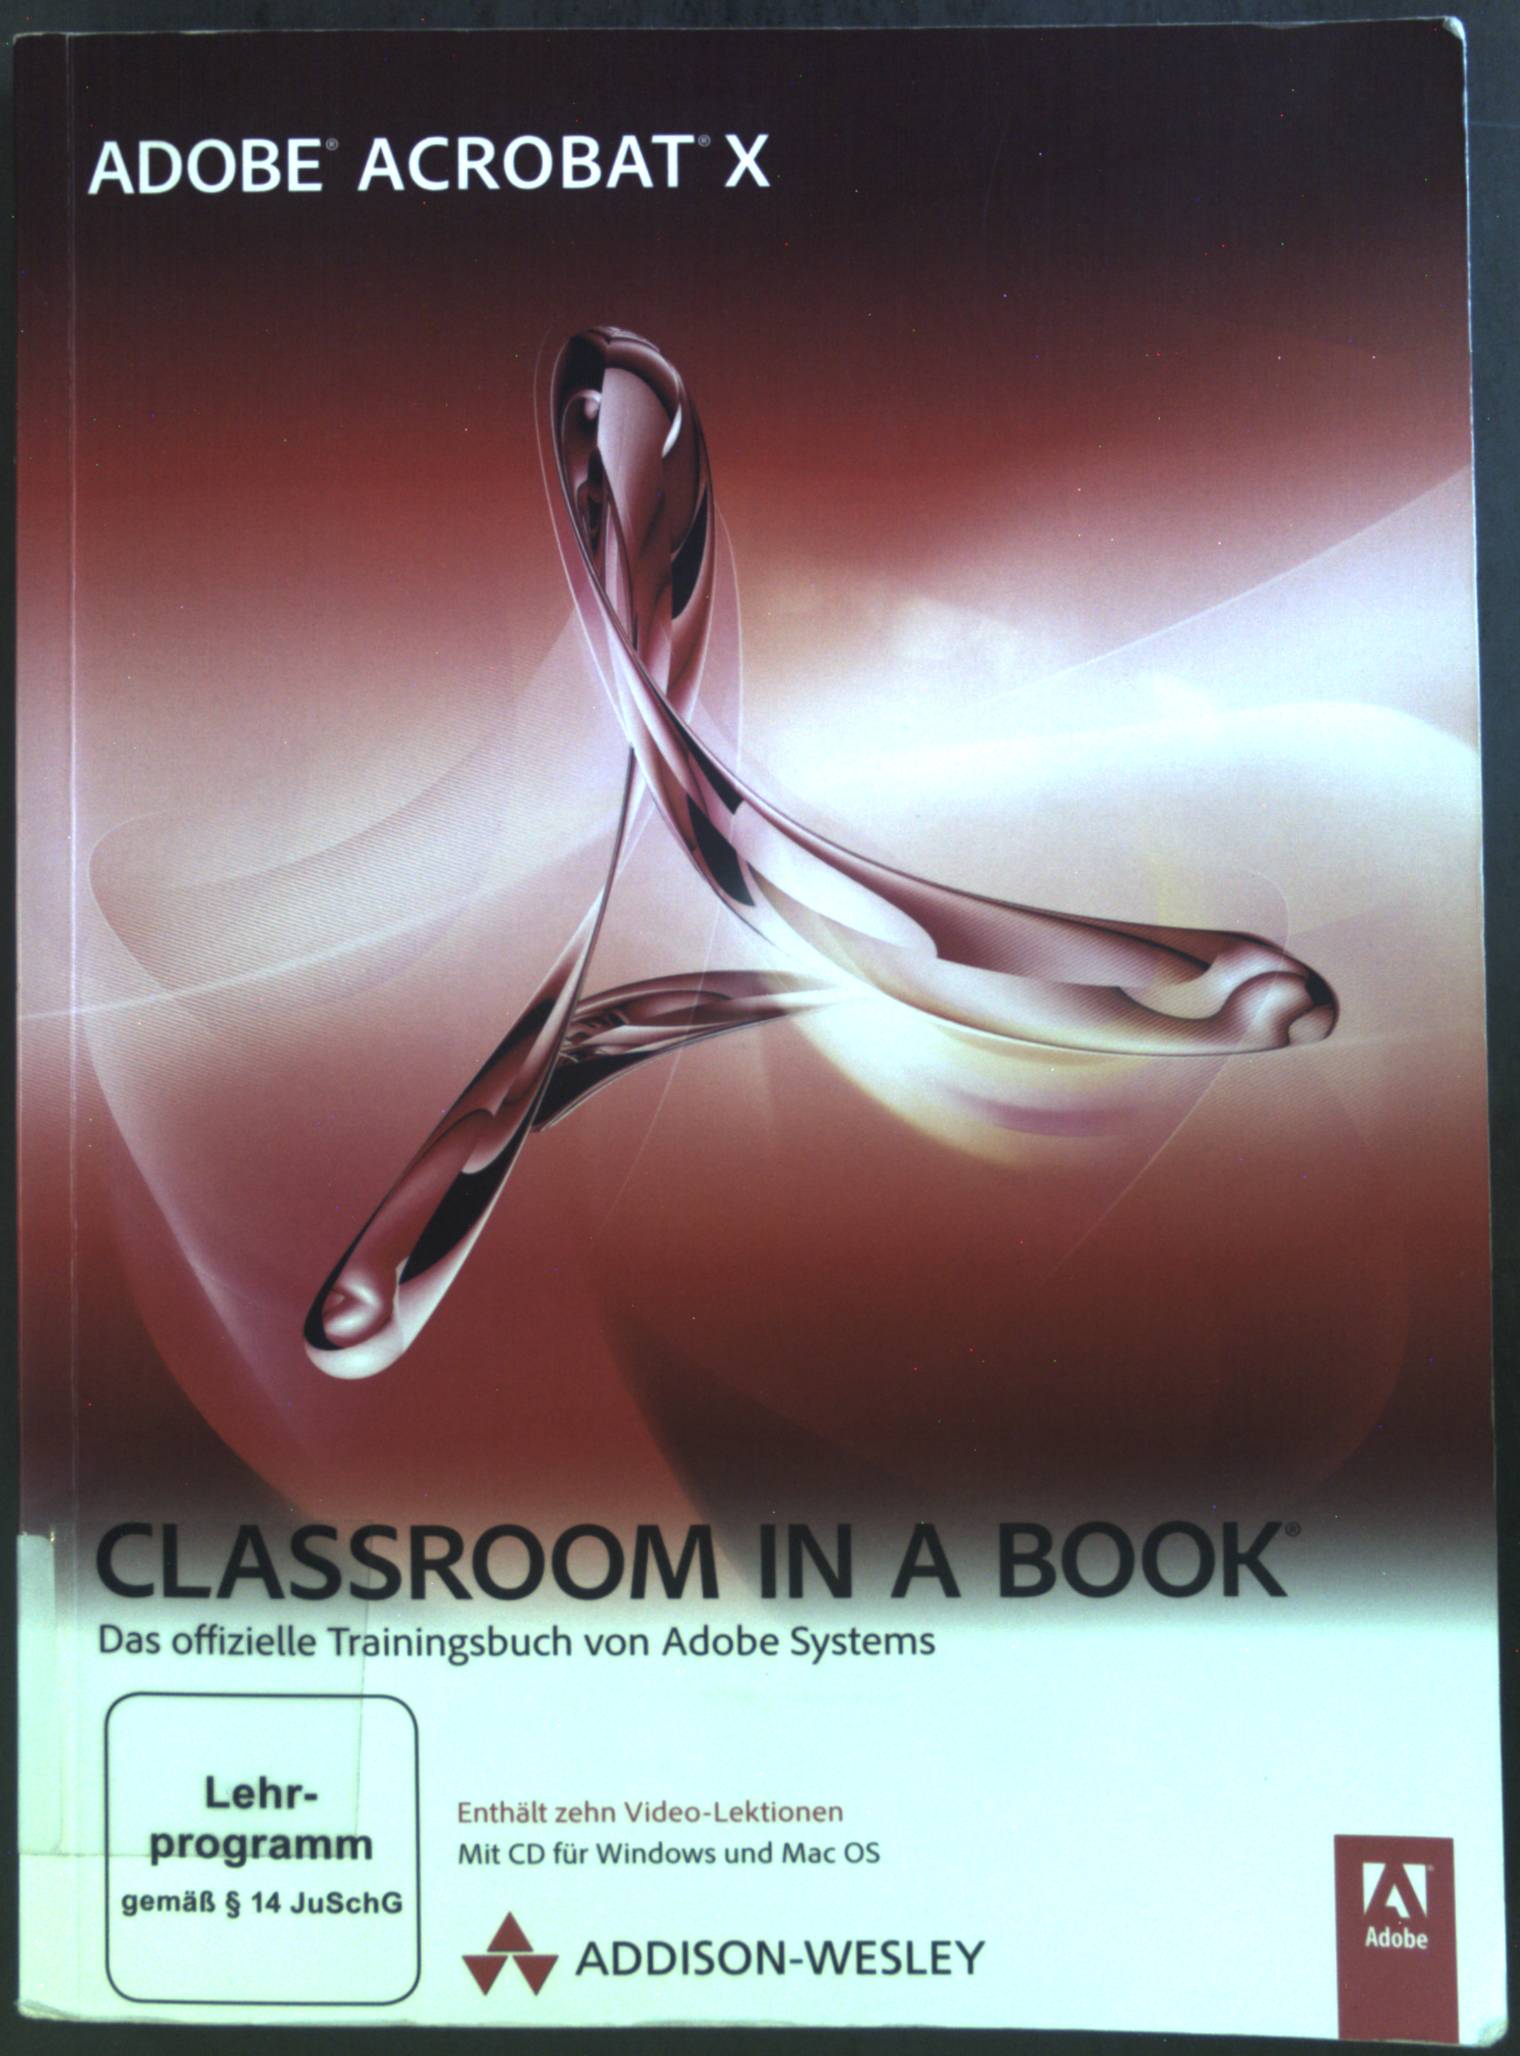 Adobe Acrobat X: Classroom in a book; Das offizielle Trainingsbuch von Adobe Systems.